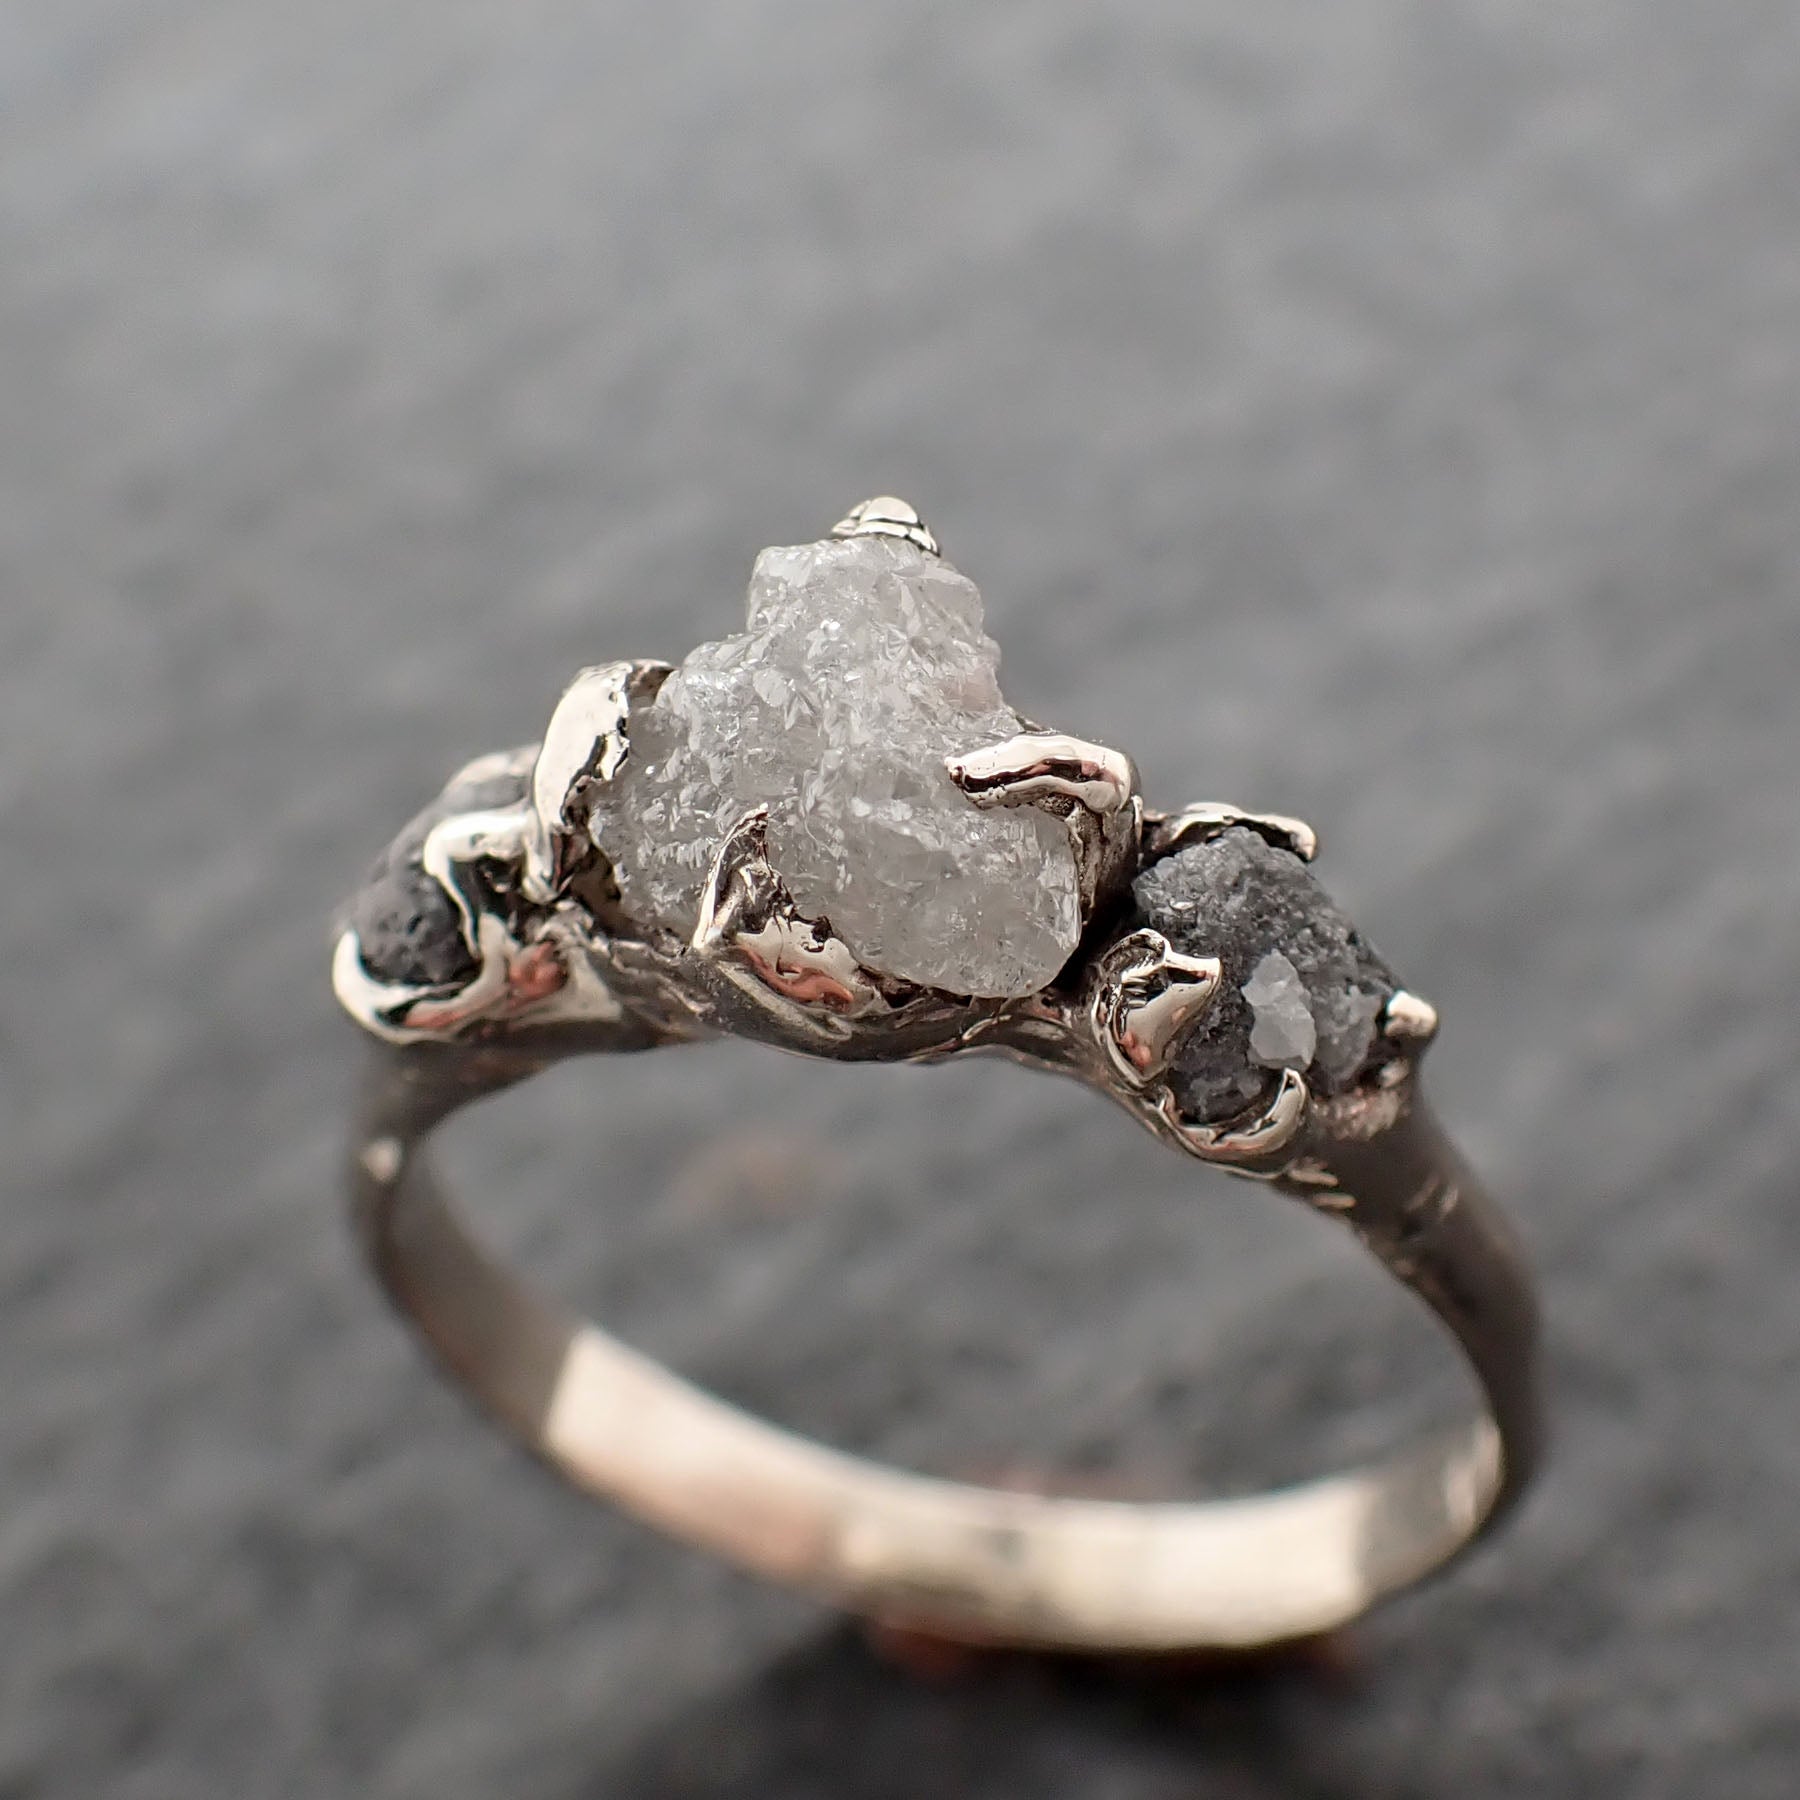 raw rough diamond engagement stacking ring multi stone wedding anniversary white gold 14k rustic byangeline 2551 Alternative Engagement